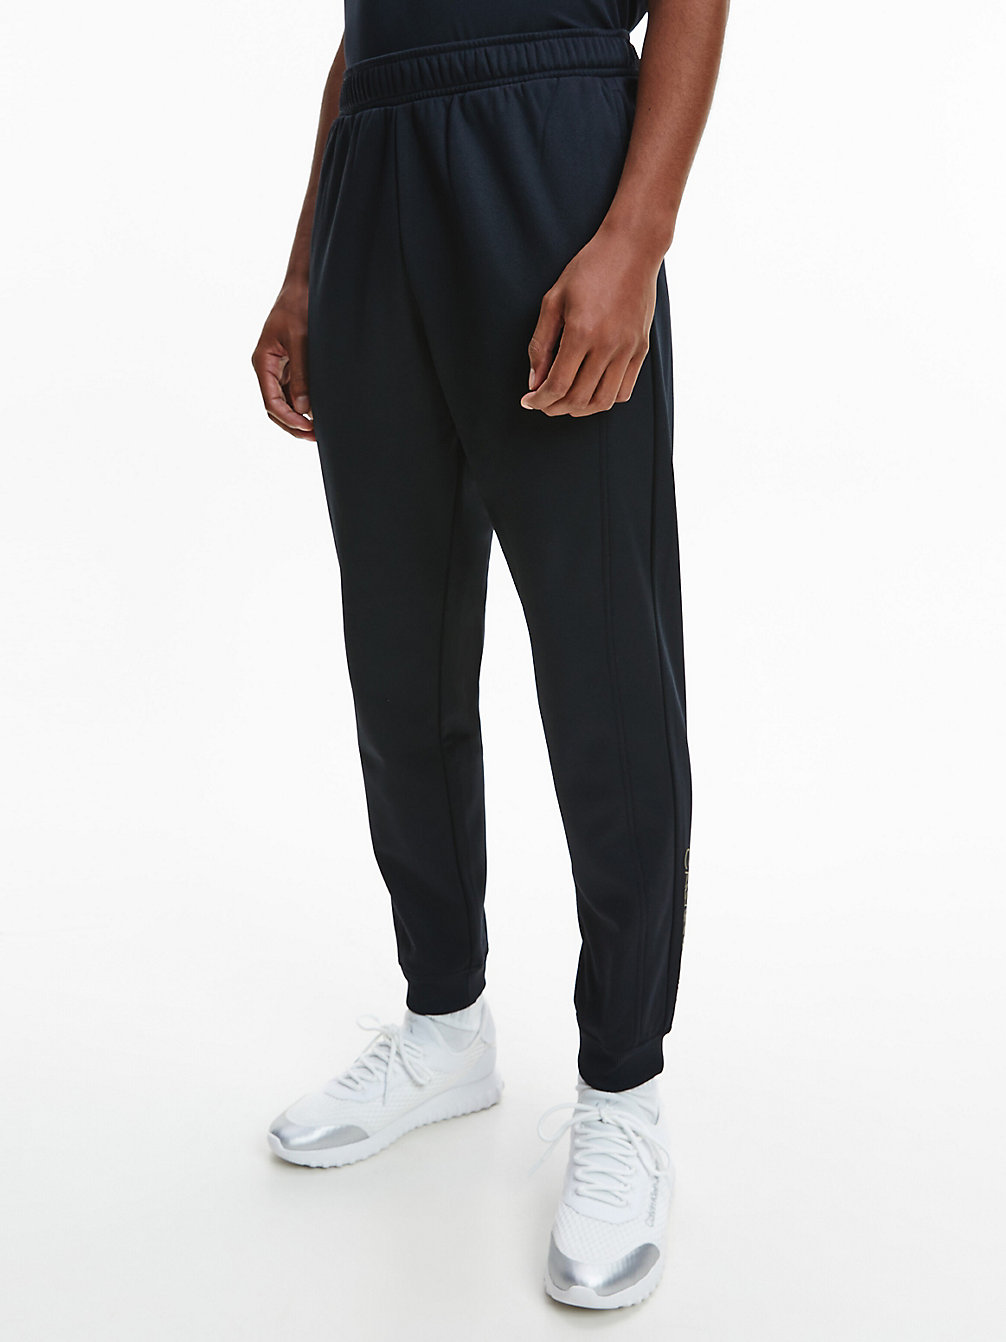 CK BLACK/CAPULET OLIVE Pantalon De Jogging Avec Logo undefined hommes Calvin Klein